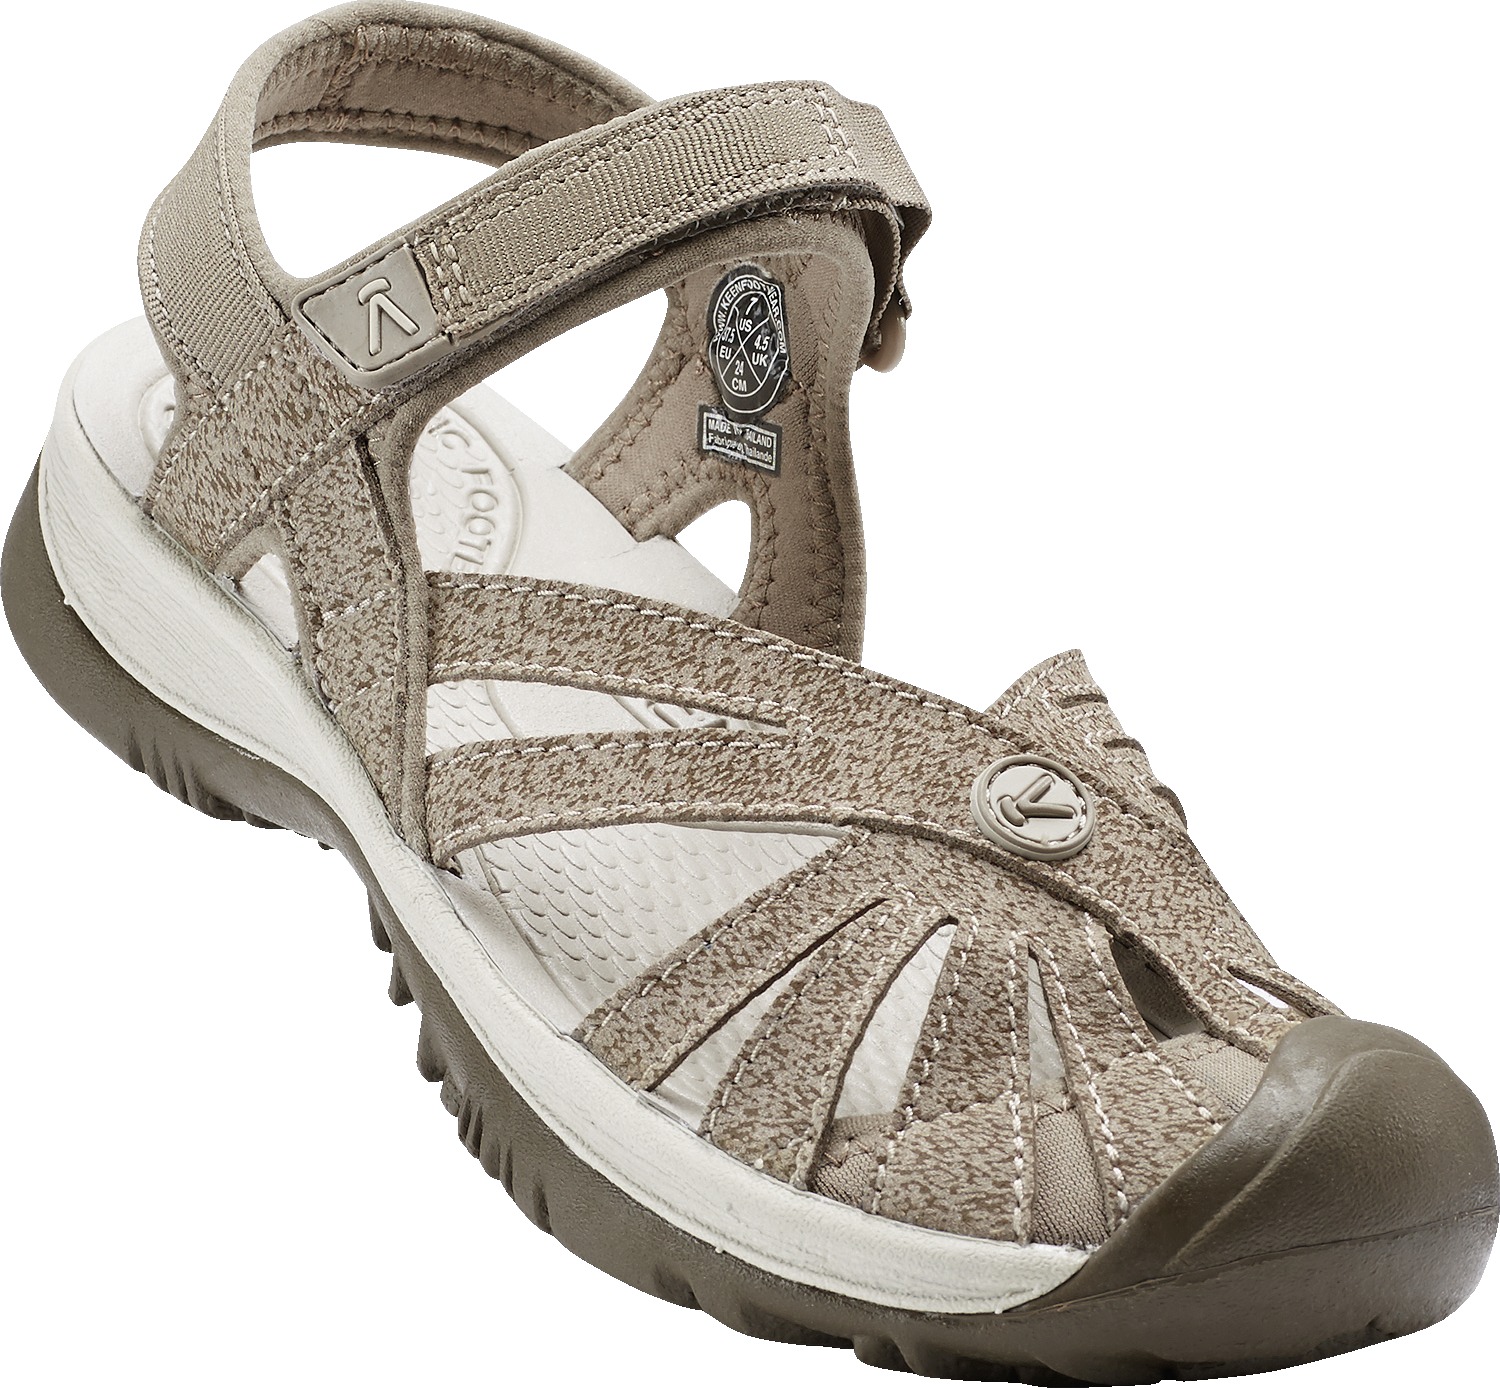 Keen dámské sandály Rose Sandal Women - Brindle/Shitake Barva: brindle/shitake, Velikost: 6 UK (39 EU / 25,5 cm)